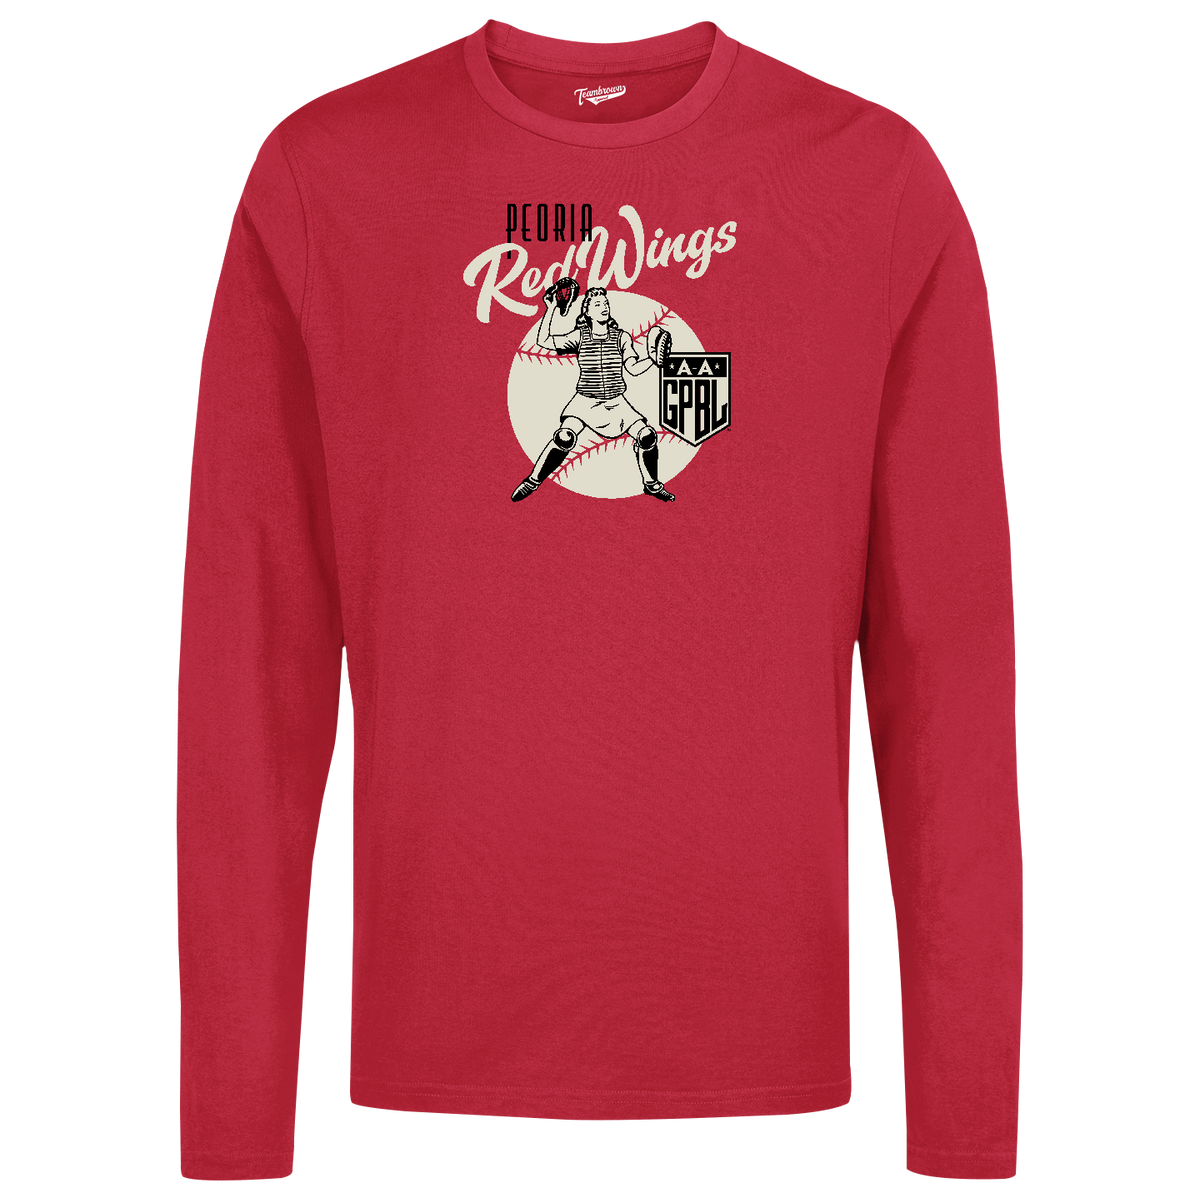 Peoria Redwings - Girls Professional Baseball Unisex Retro T-Shirt S